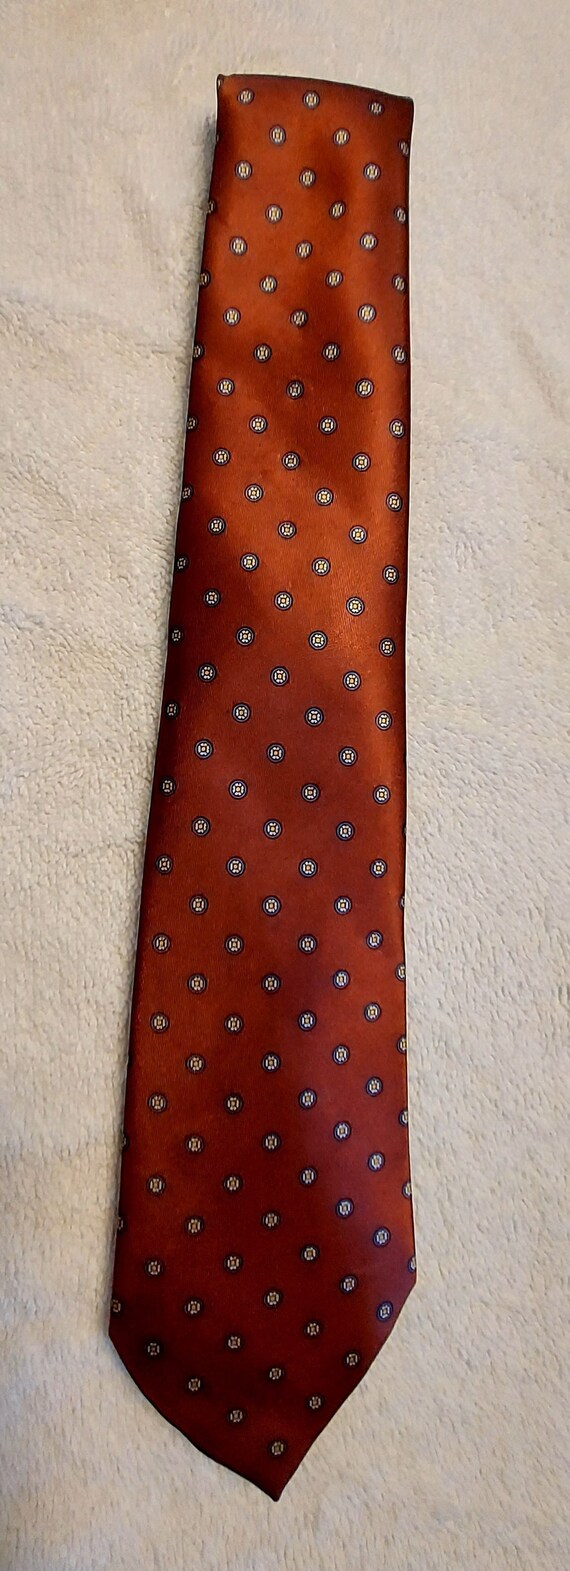 Rare Find Vintage Van Heusen Quality Neckties Lot… - image 3